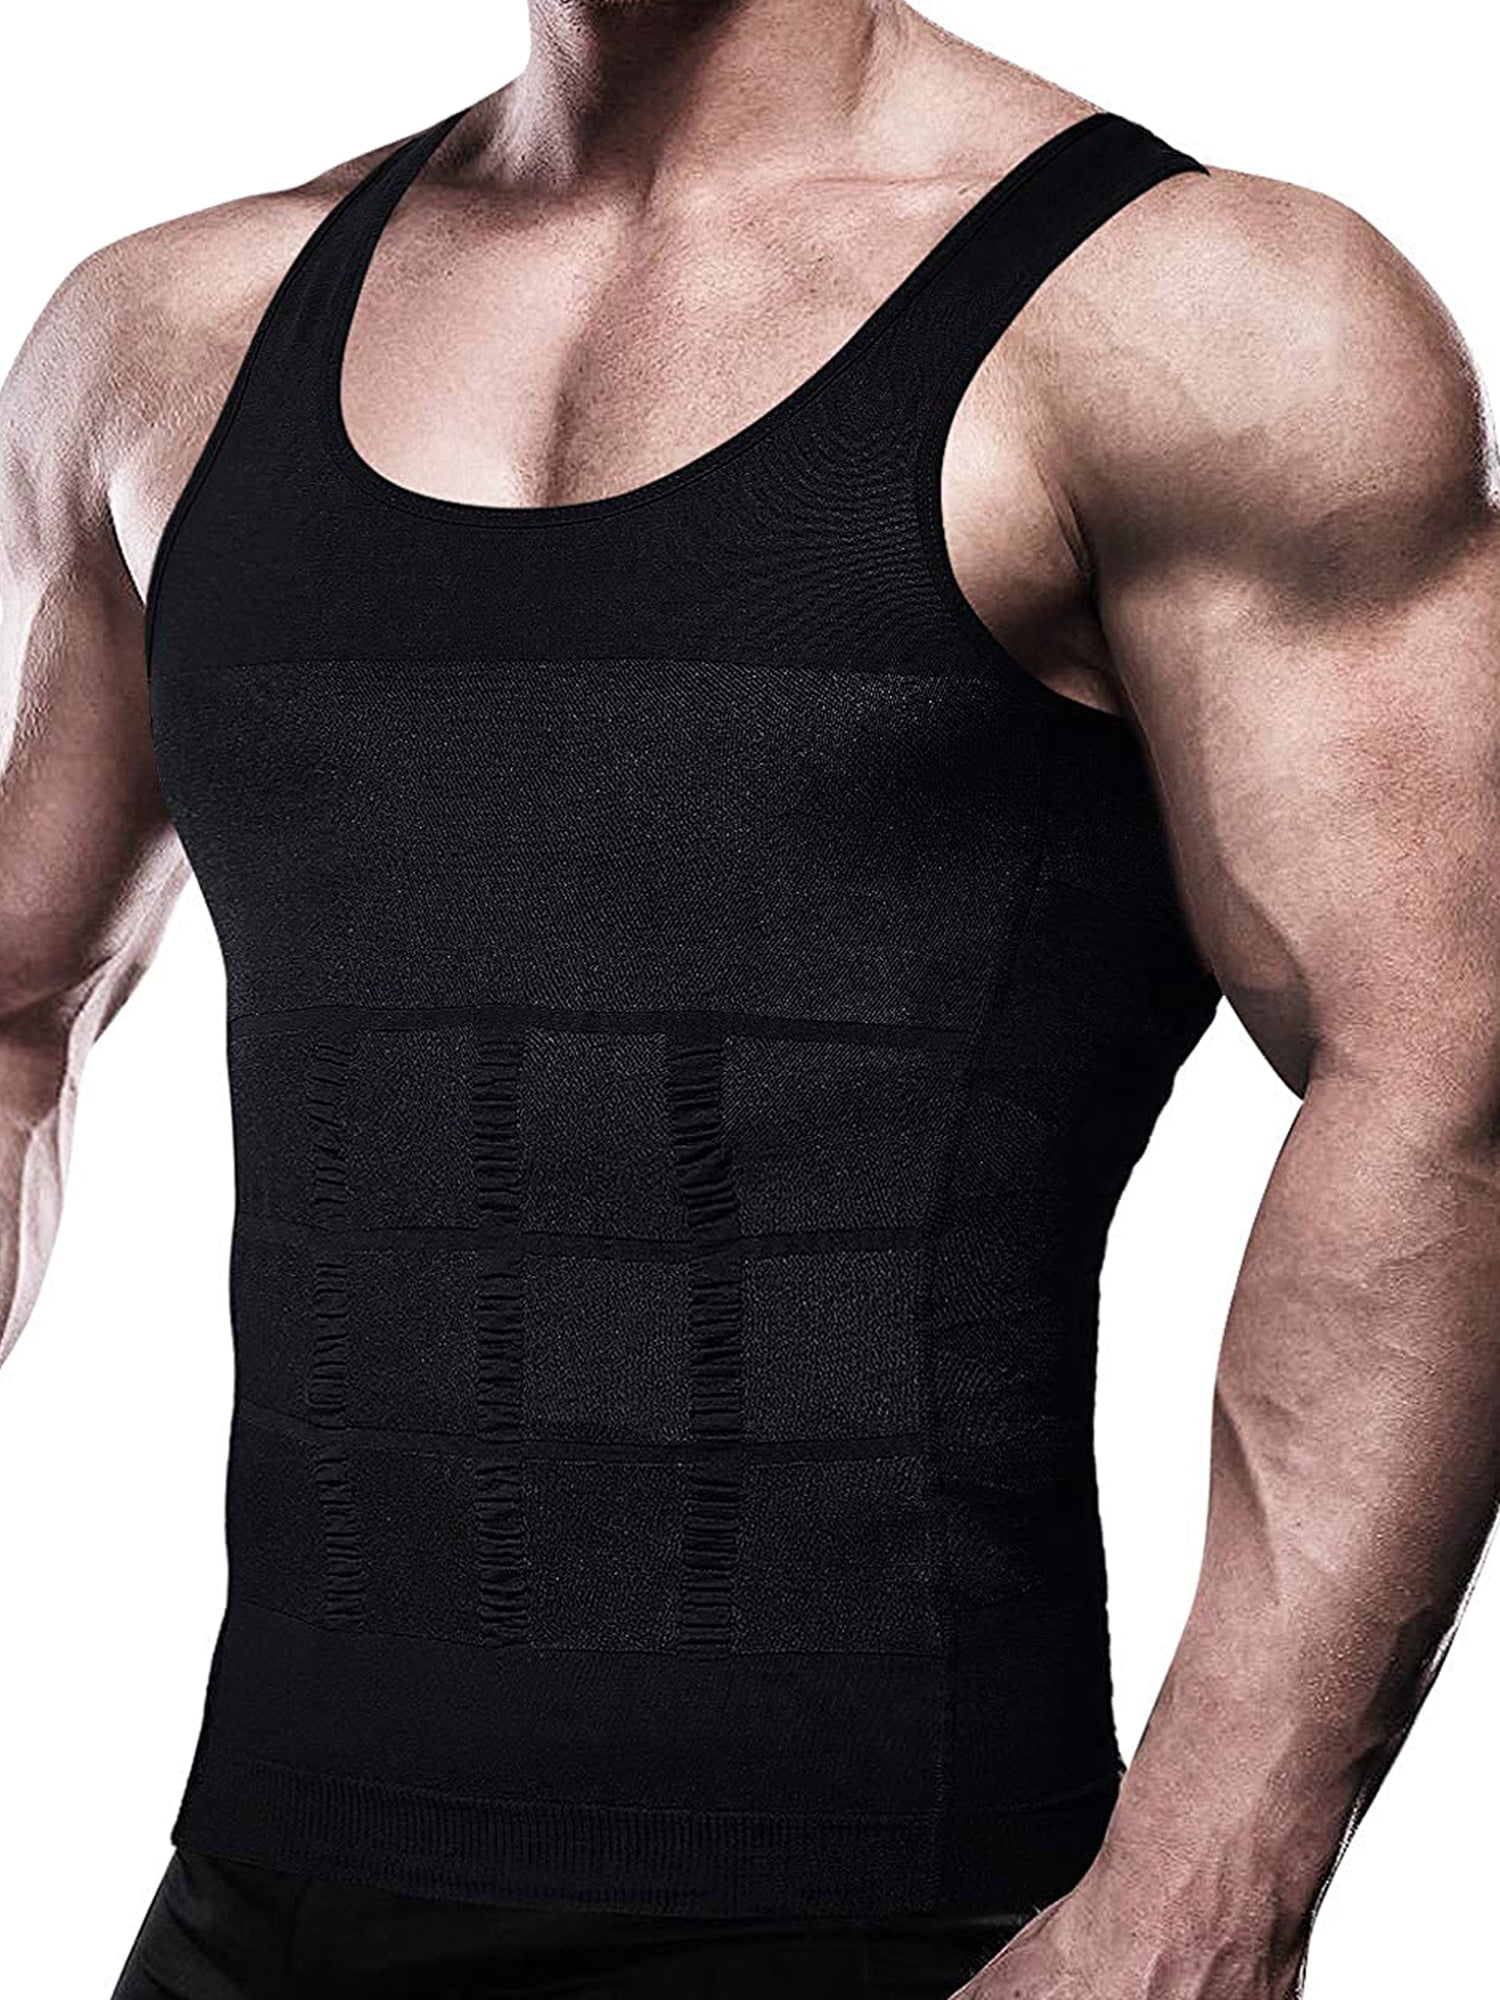 SHAPERIN Men's 2 Pack Compression Shirt Slimming Body Shaper Vest Tummy ...